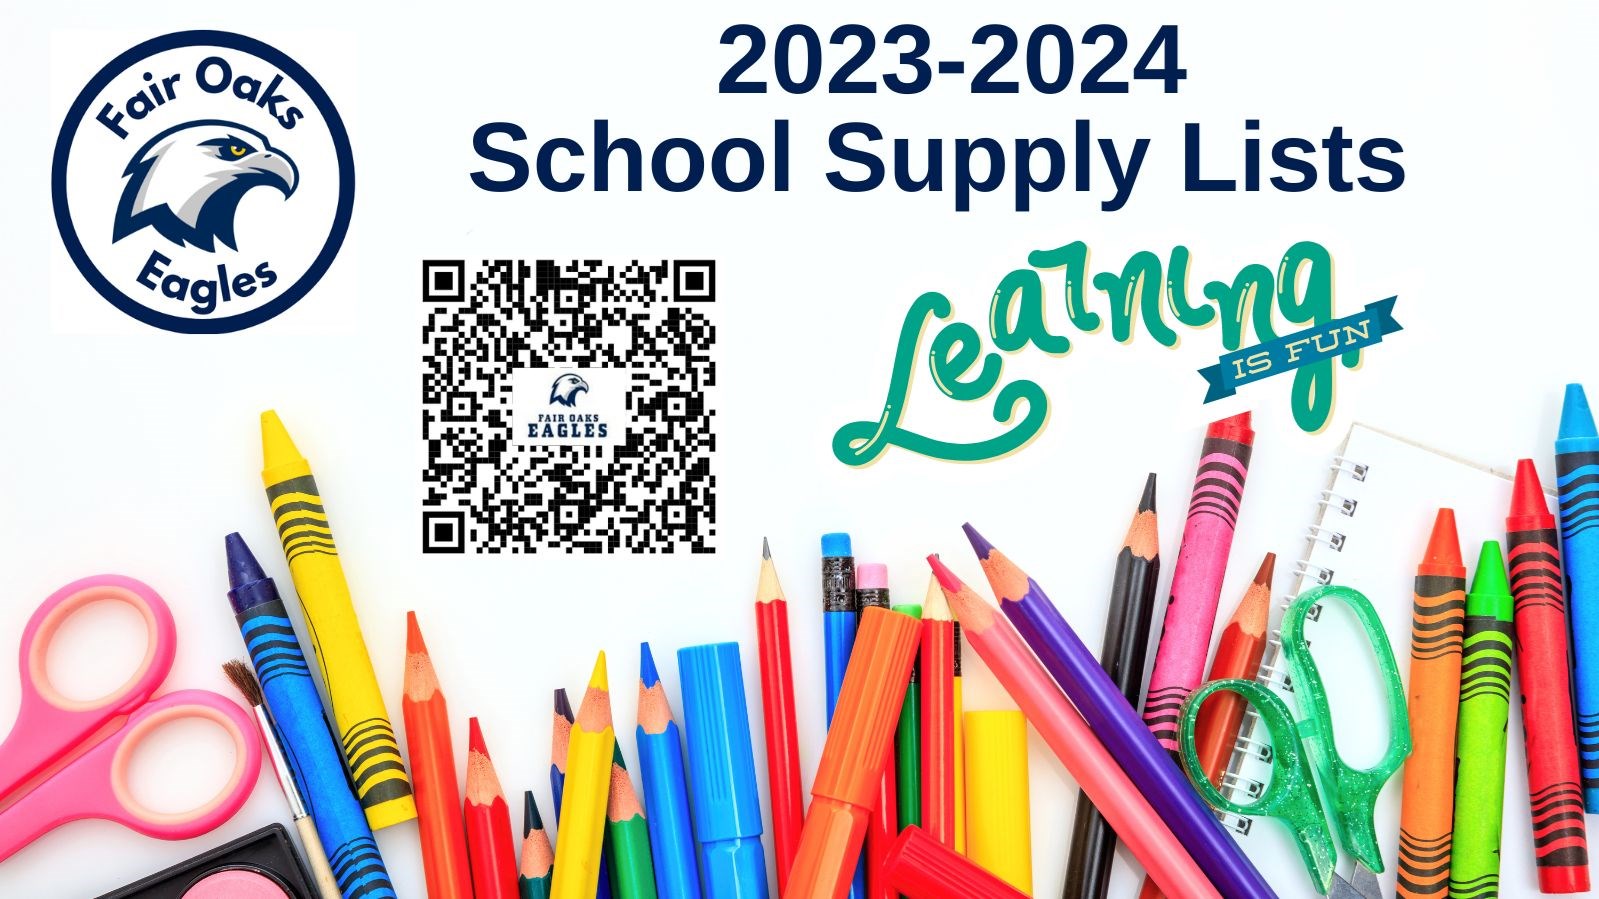 School Supply Info / School Supplies